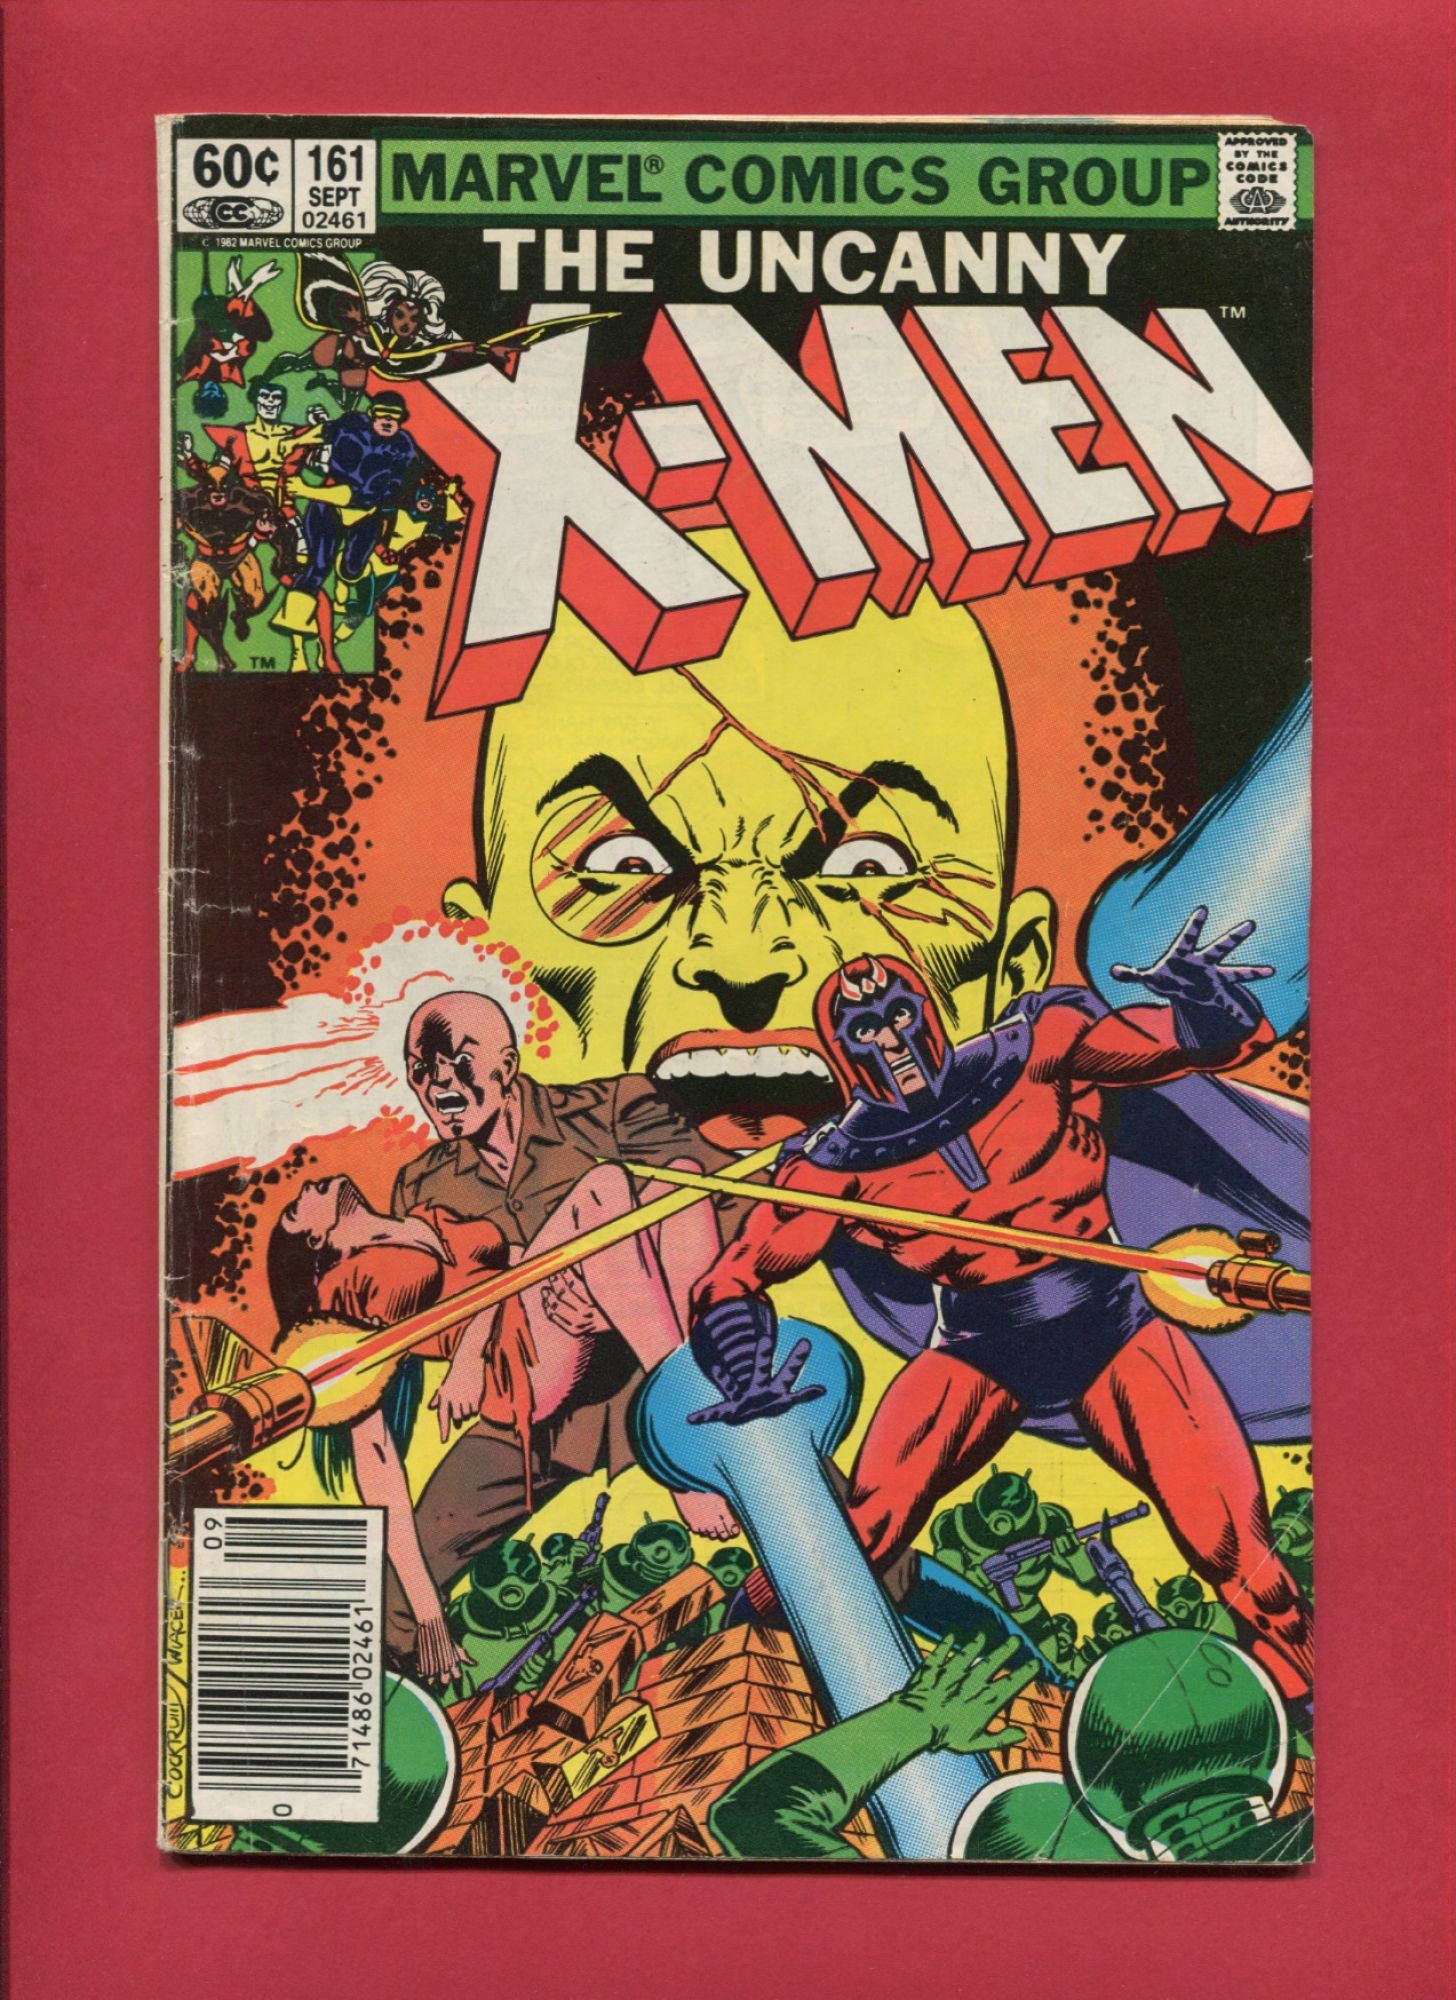 Uncanny X-Men #161, Sep 1982, 4.5 VG+